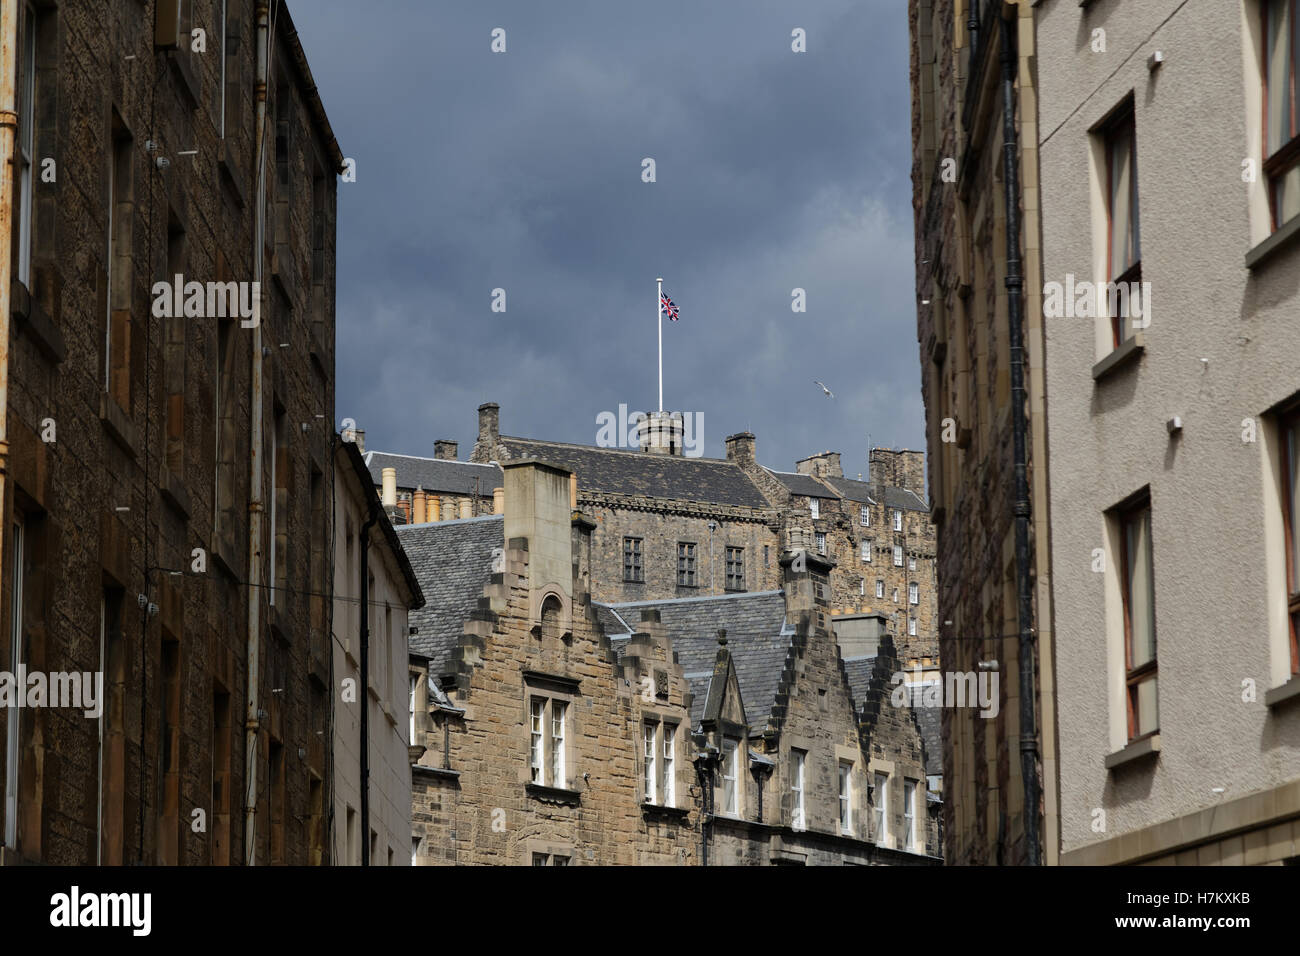 Szenen aus dem Edinburgh Festival Fringe Jungfrau gesponsert Straßenfest 2015 Edinburgh, Scotland, UK Stockfoto